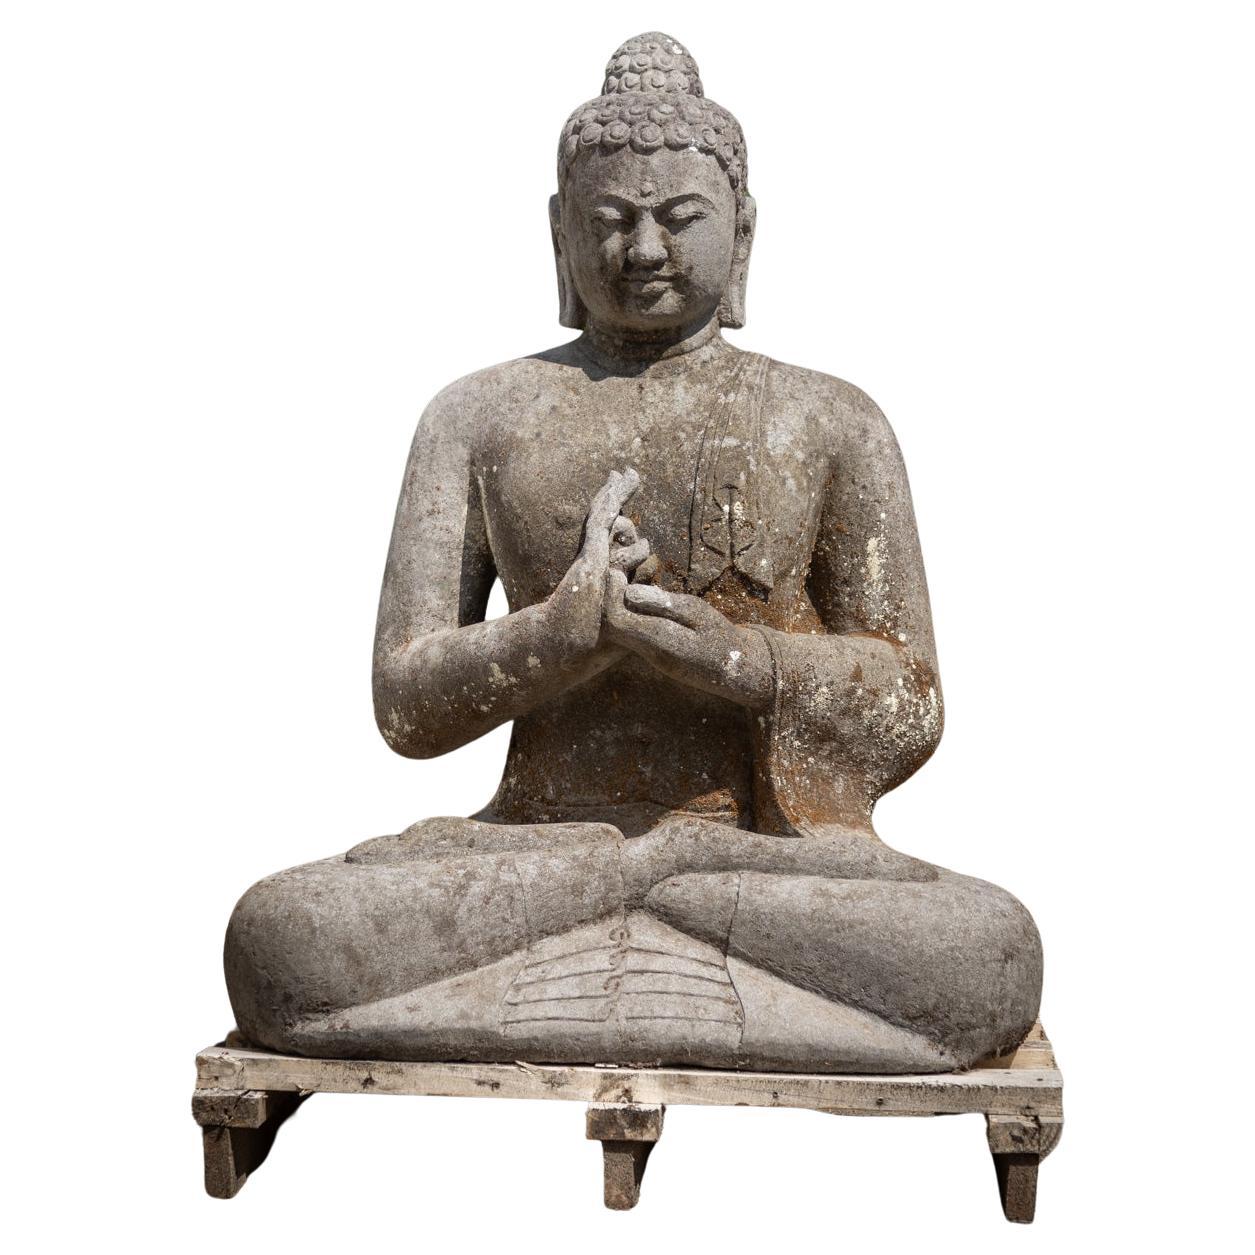 Mid 20th century large old lavastone Buddha statue in Dharmachakra mudra 